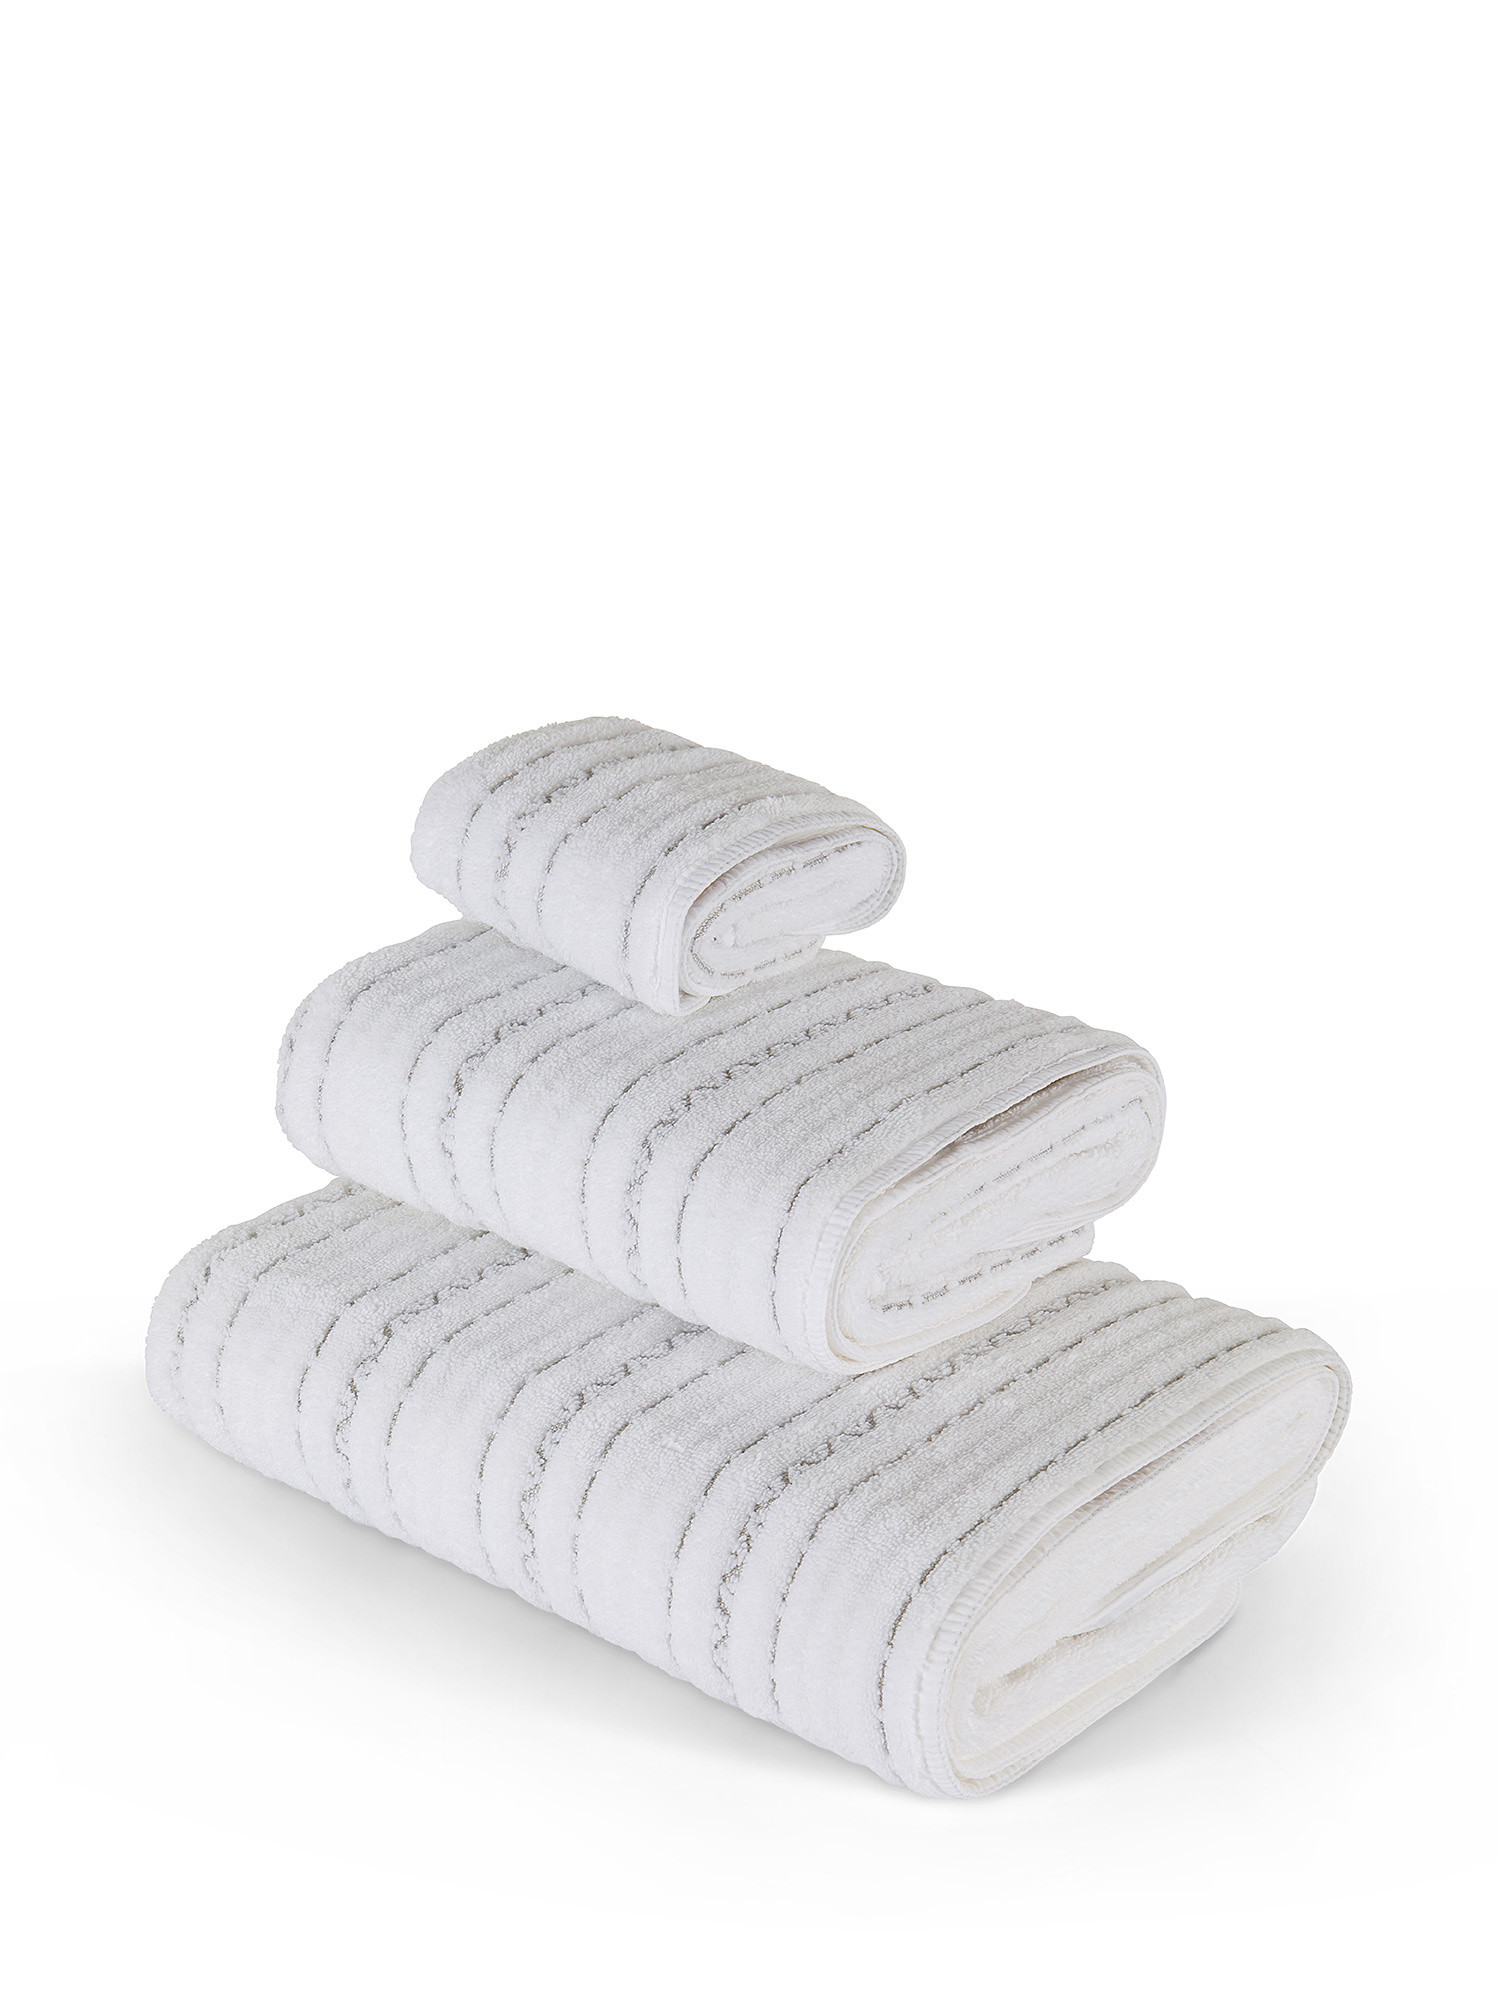 Thermae jacquard cotton towel, White, large image number 0